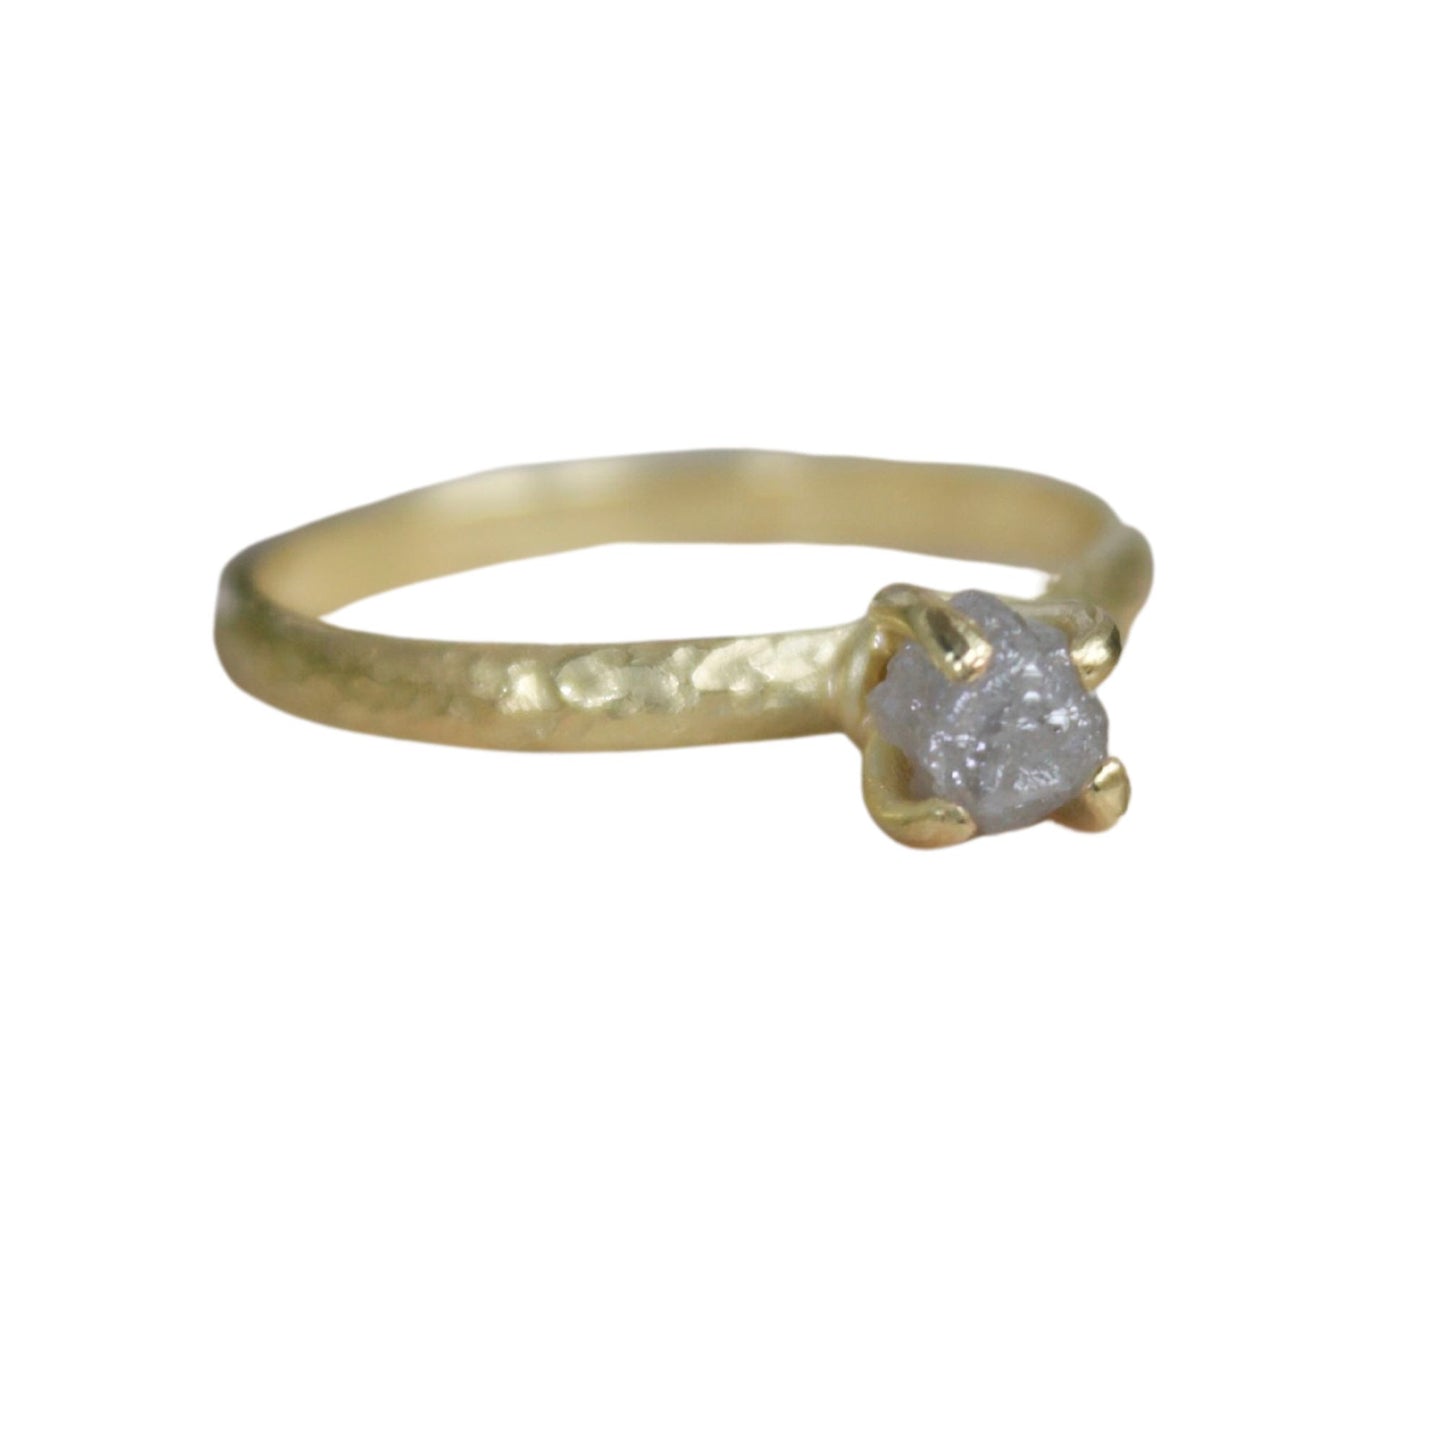 Raw uncut rough diamond 18ct gold engagement ring